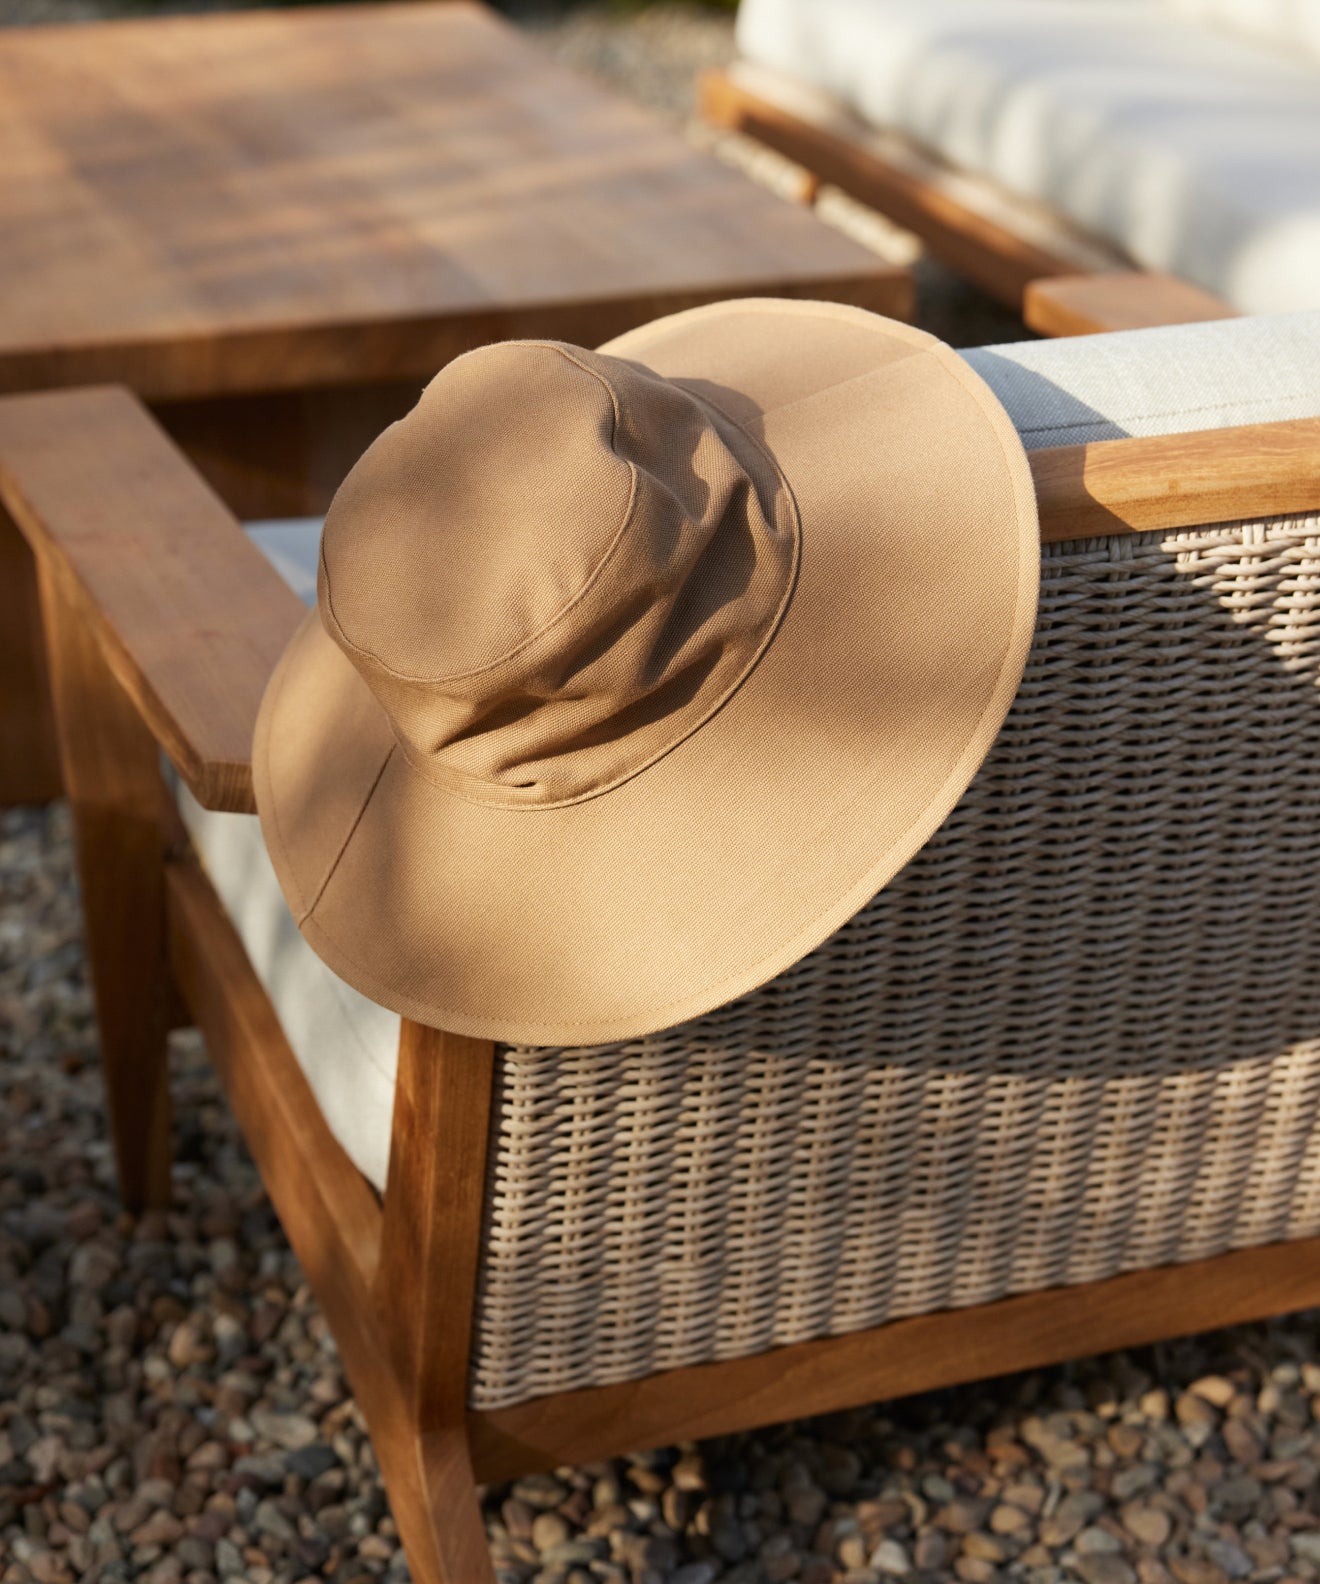 Jenni Kayne Women's Cotton Canvas Sun Hat Size Medium/Large